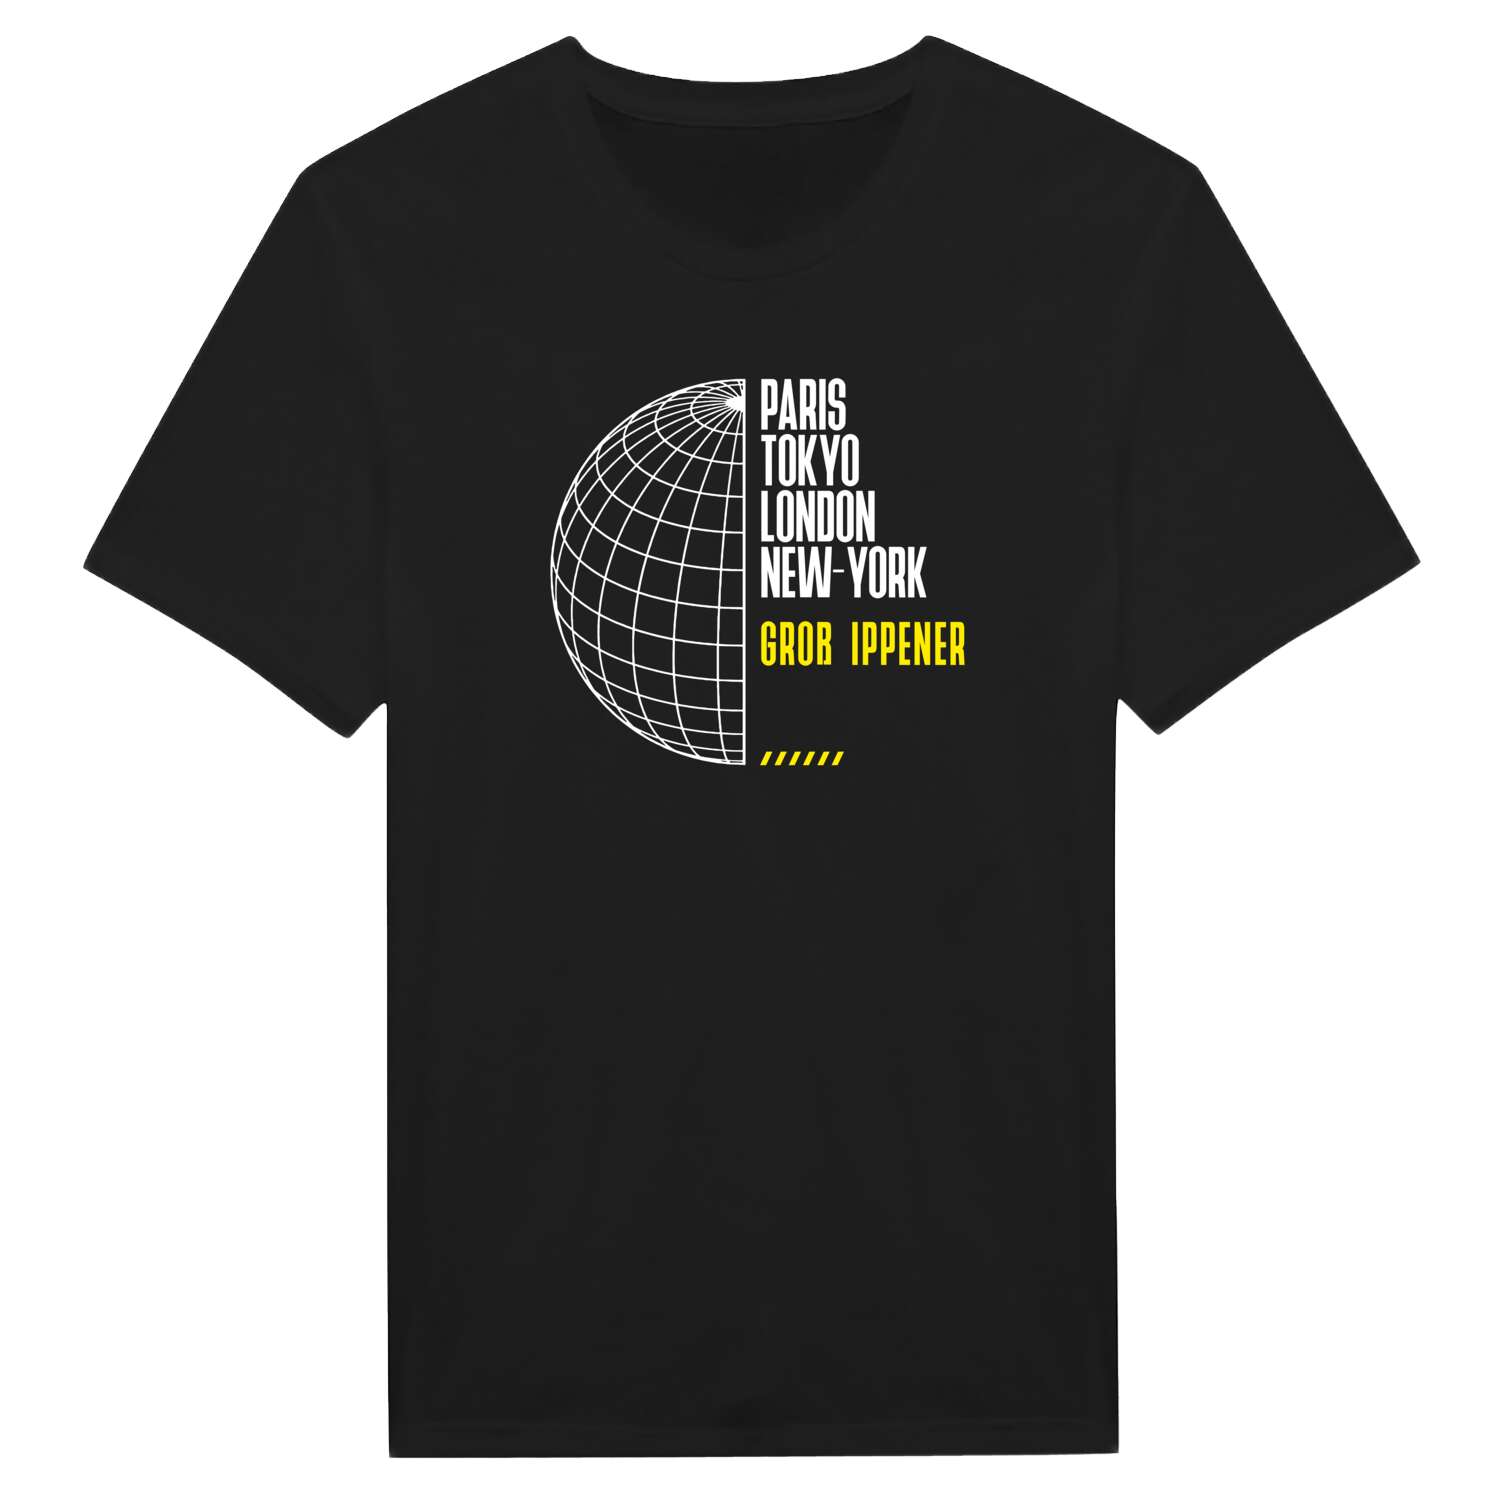 Groß Ippener T-Shirt »Paris Tokyo London«